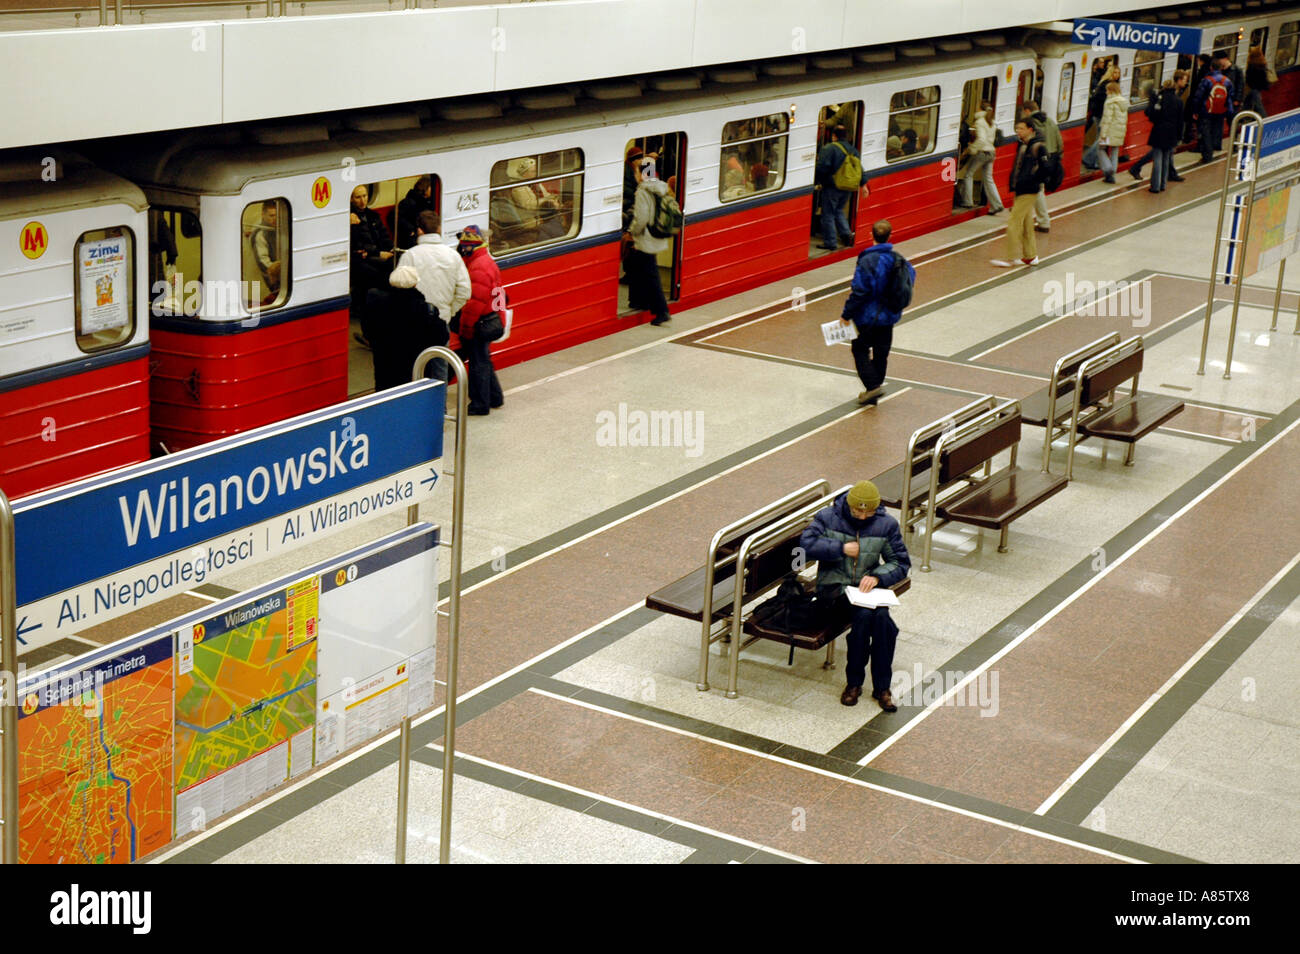 Wilanowska underground station in Warsaw Poland Stock Photo